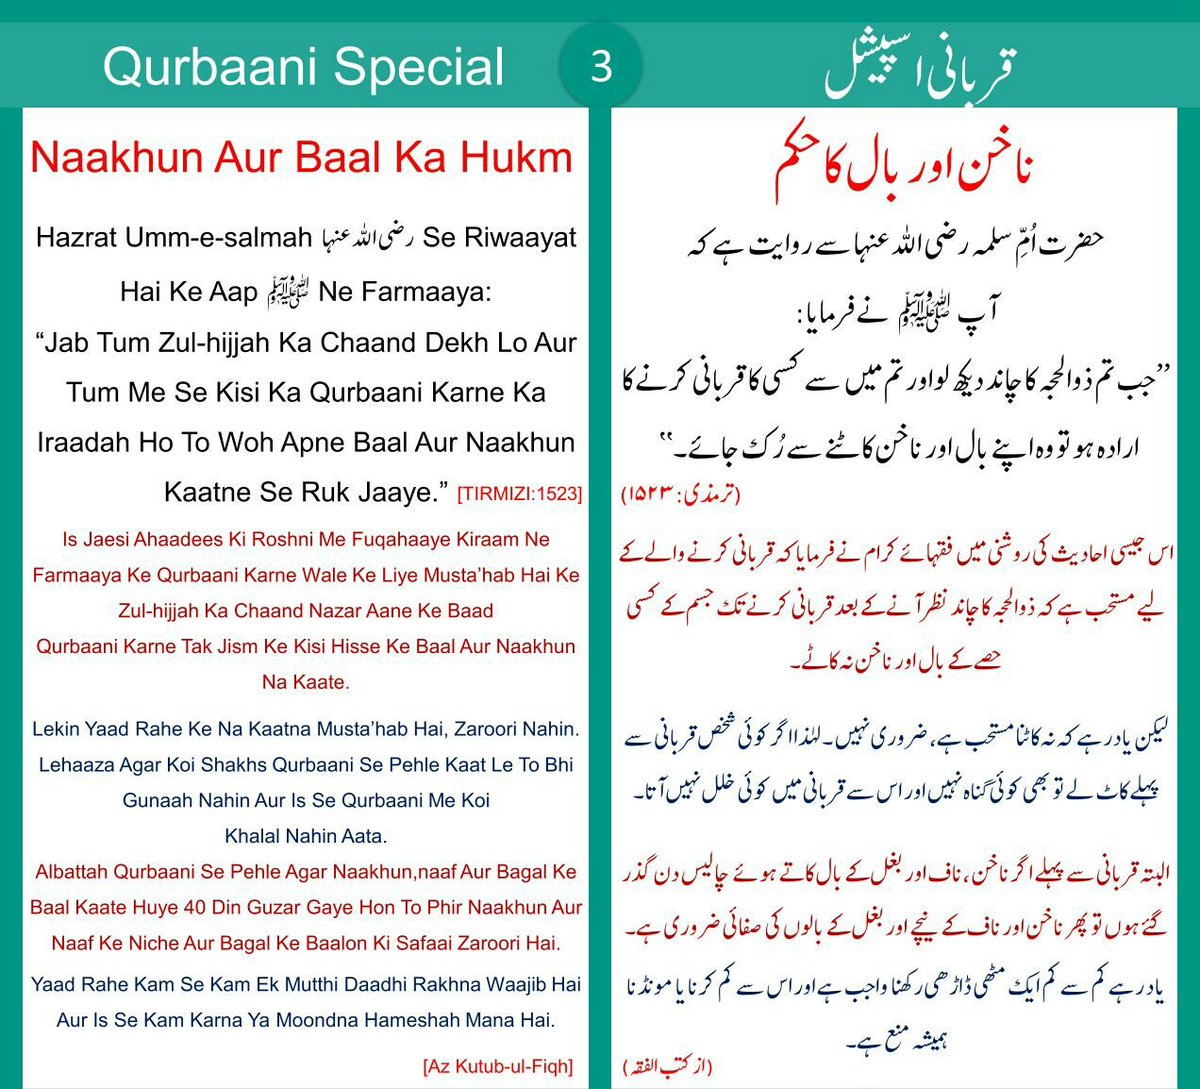 Qurbaani Special...